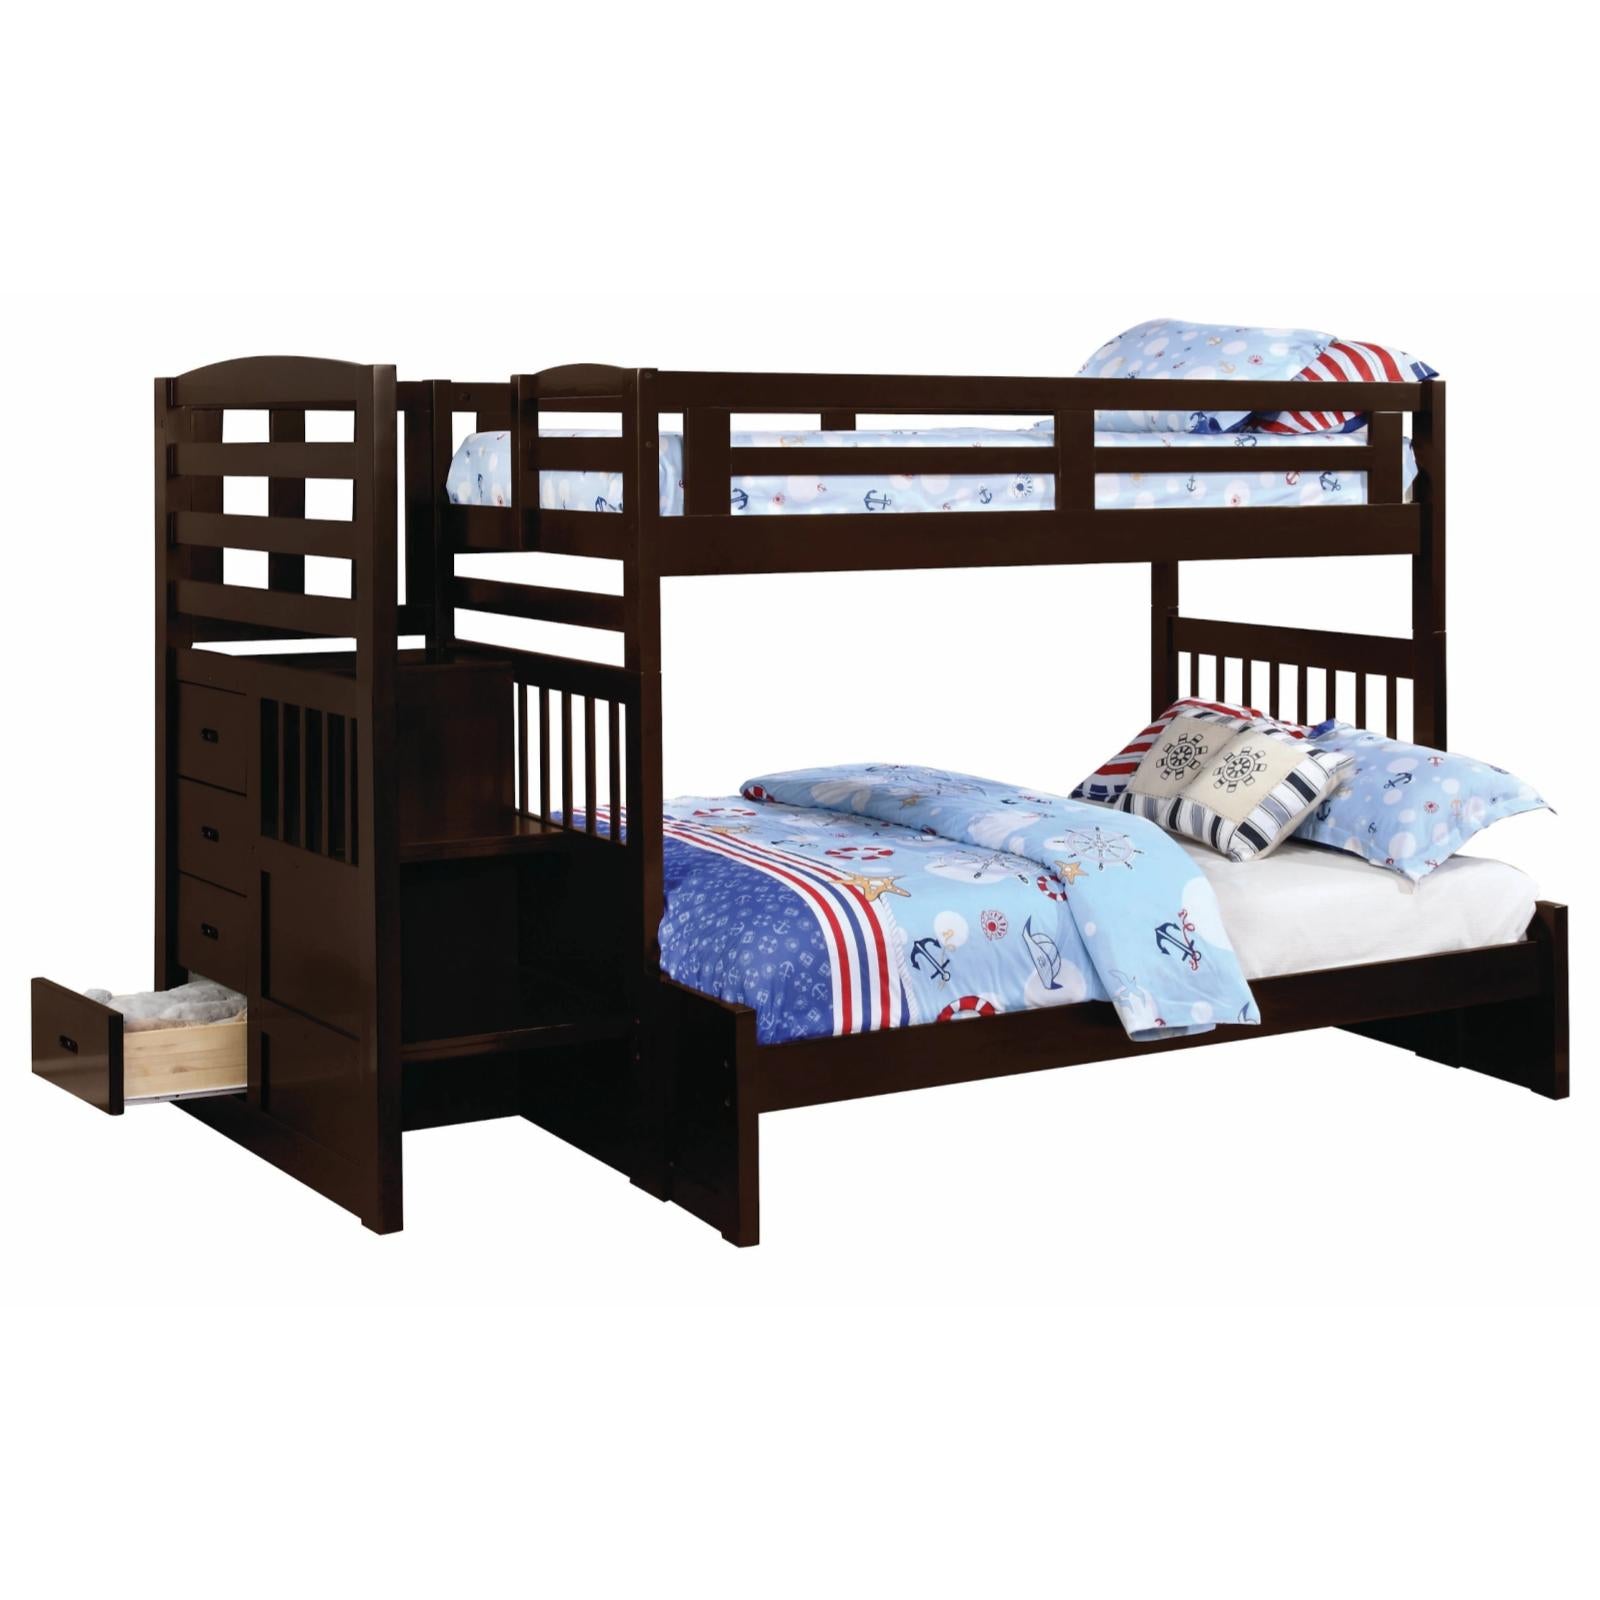 halanton twin over twin bunk bed